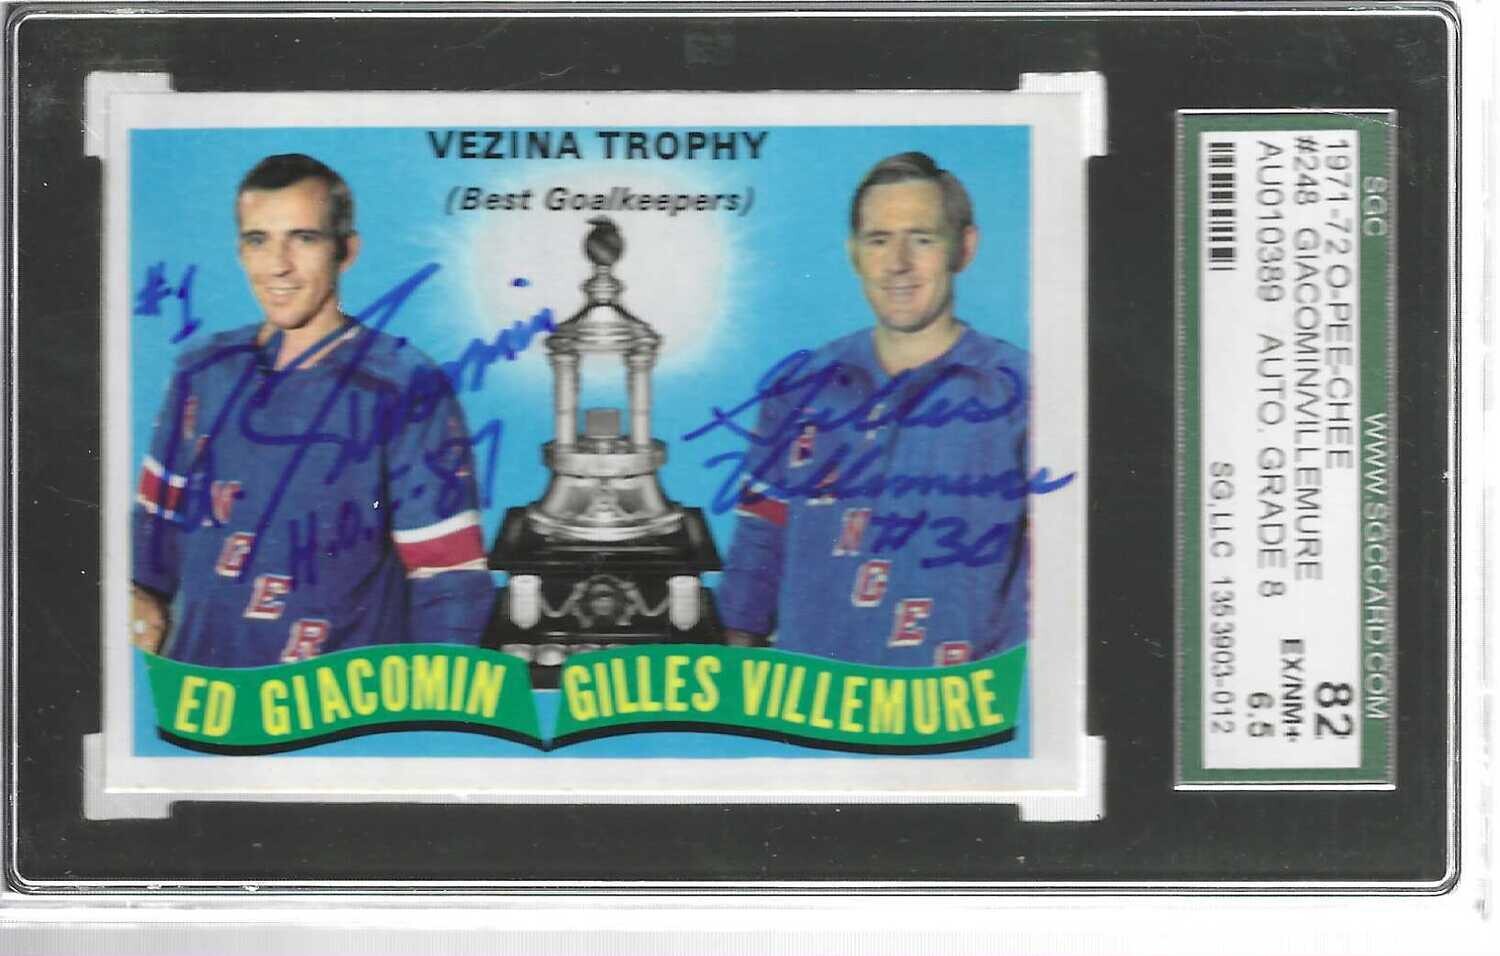 '71/72 Opeechee #248 Ed Giacomin/Gilles Villemure Vezina  Trophy Autographed card SGC 6.5